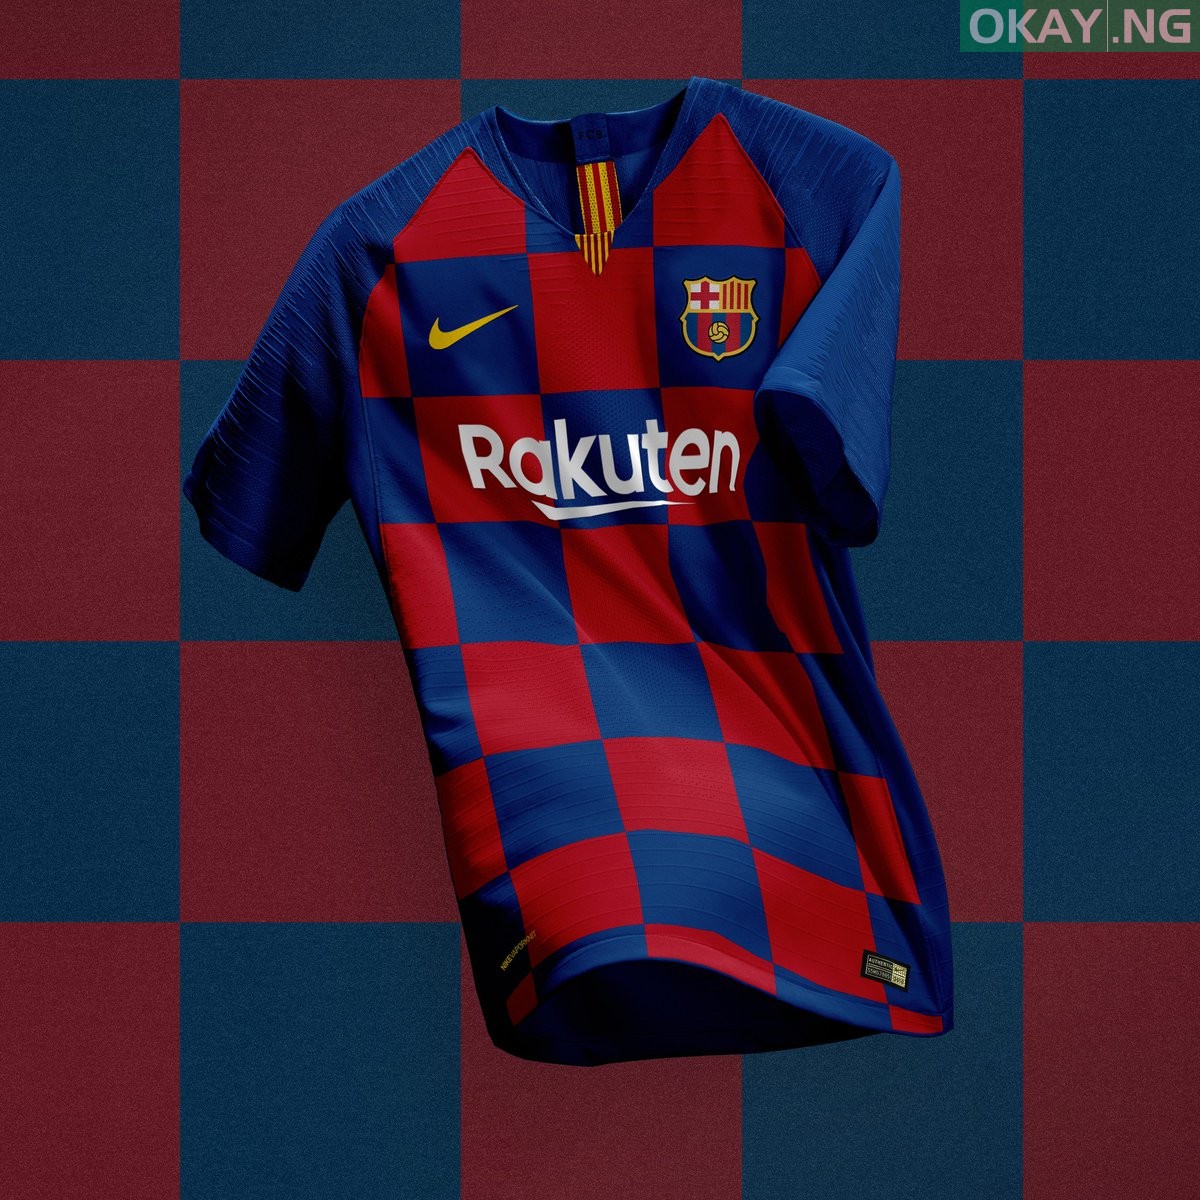 Barcelona New Home Kit for 2019-2020 Season leaked [See Photo] • Okay.ng